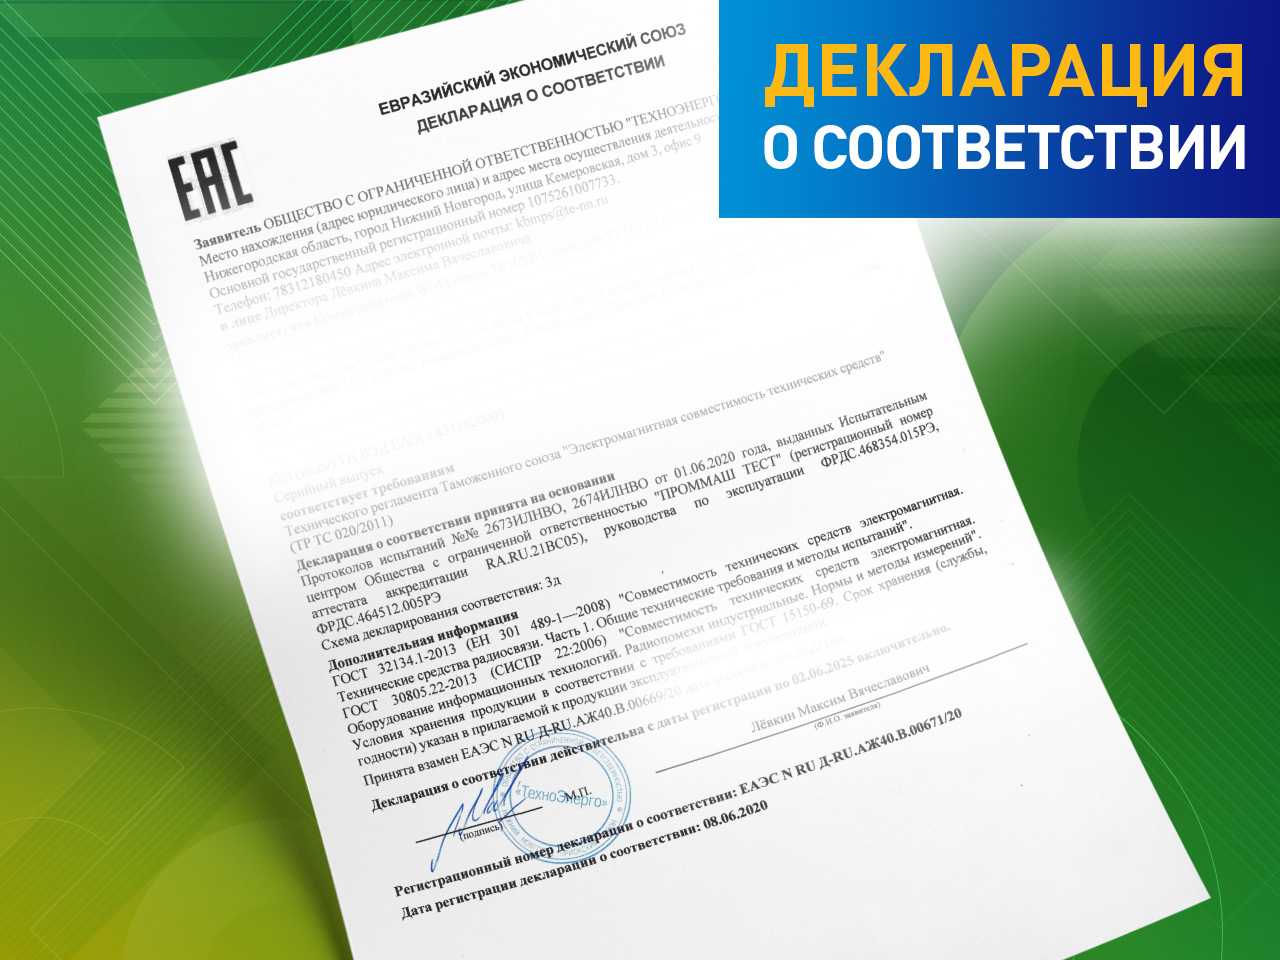 Обновление декларации о соответствии на счетчики электроэнергии ПСЧ-4ТМ.05МКТ